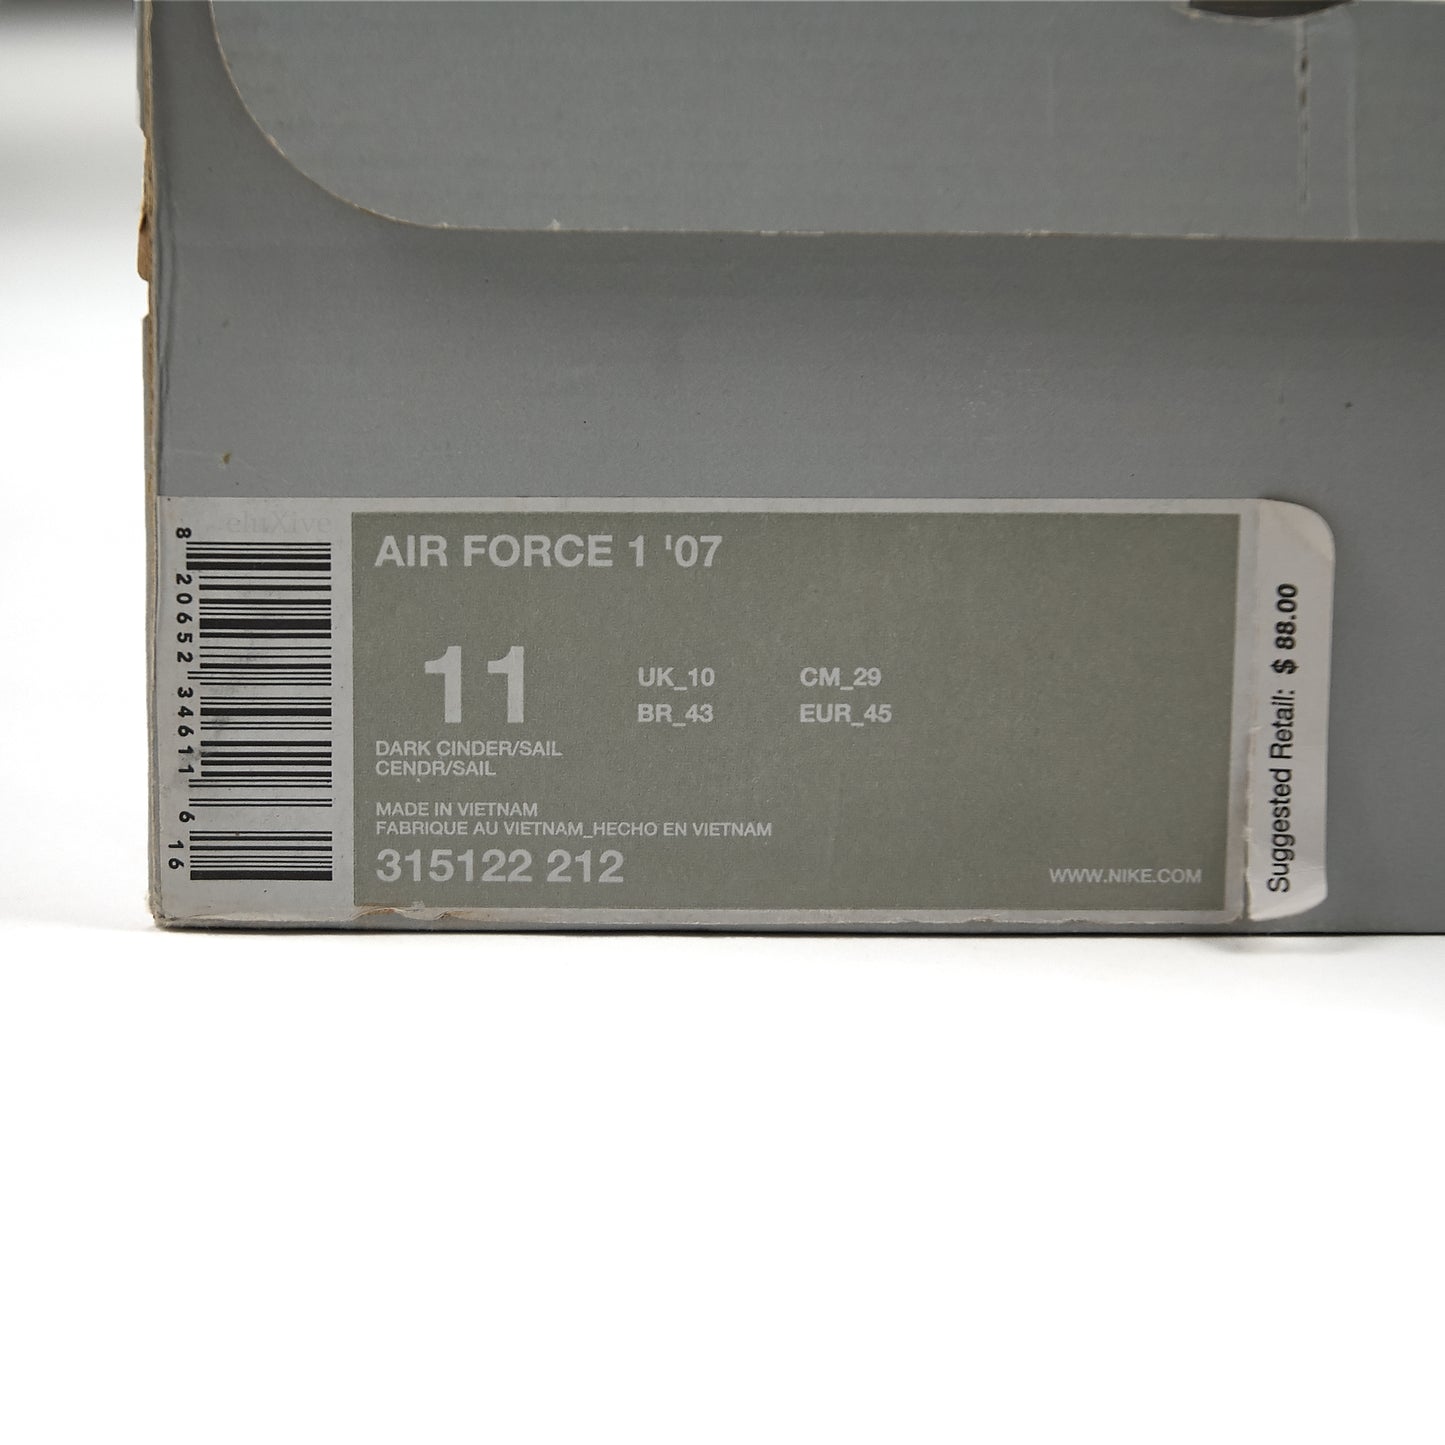 Nike - Air Force 1 '07 (Dark Cinder/Sail)